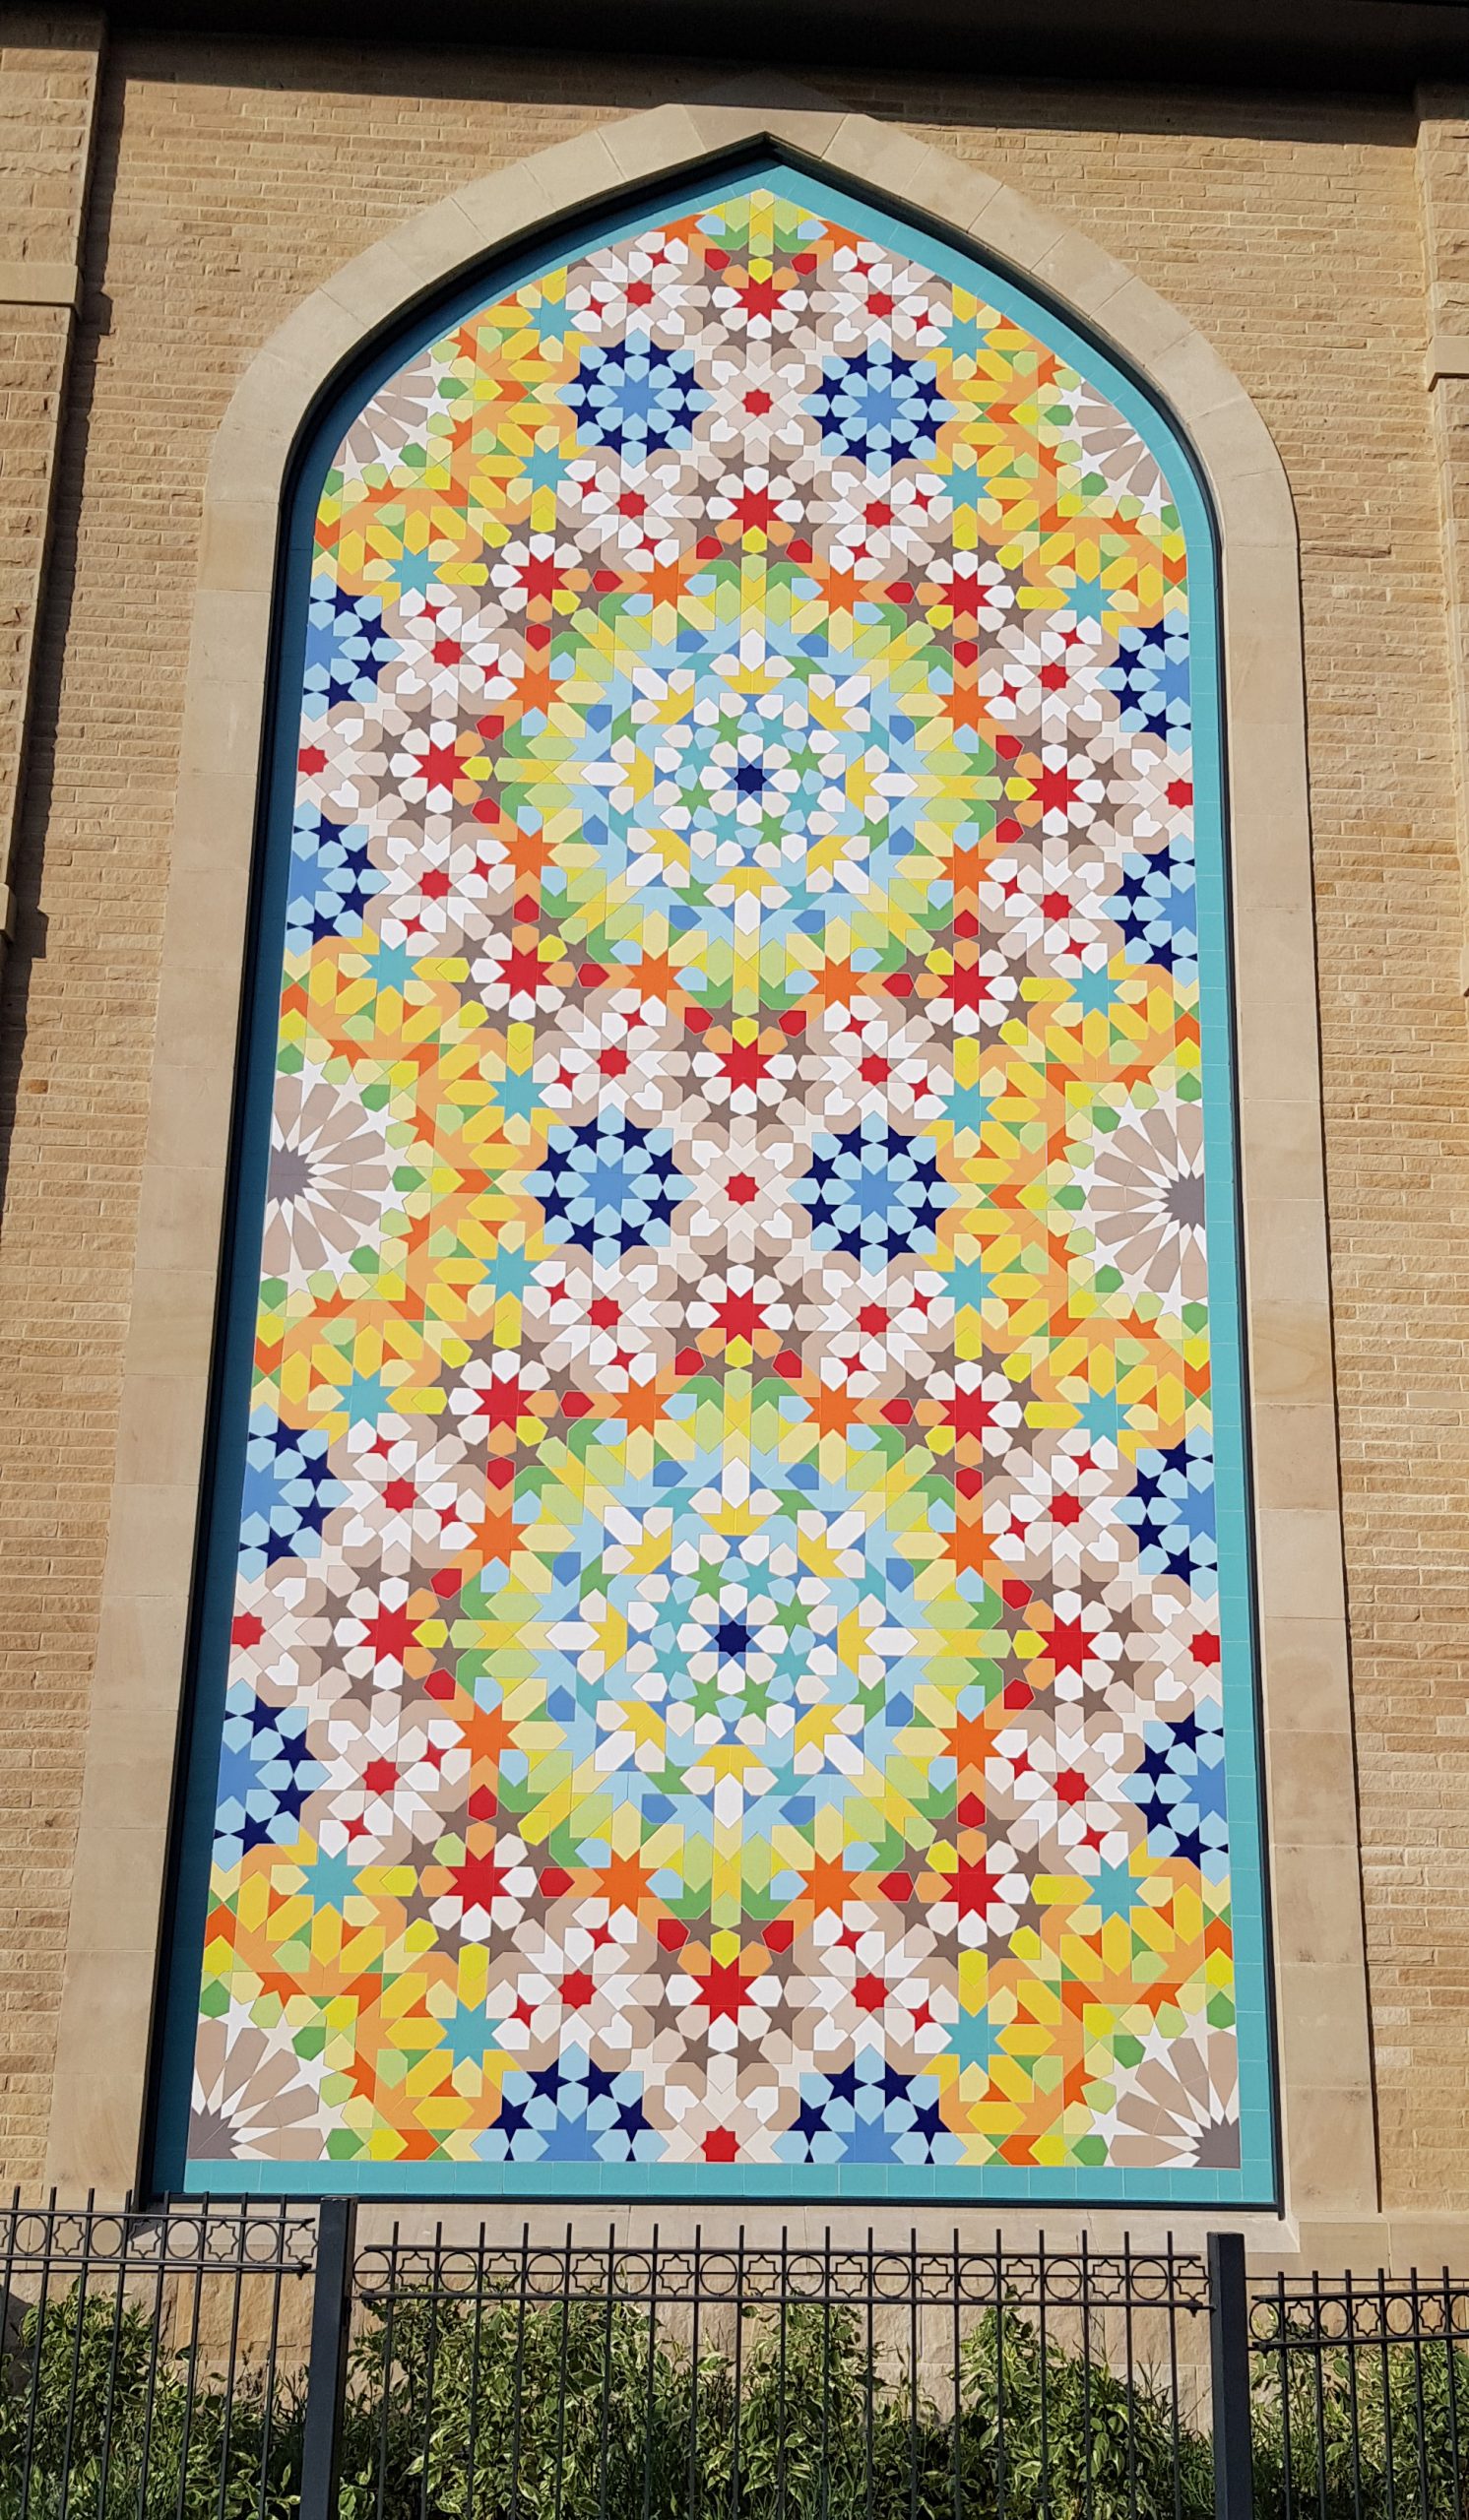 Moroccan geometric composition